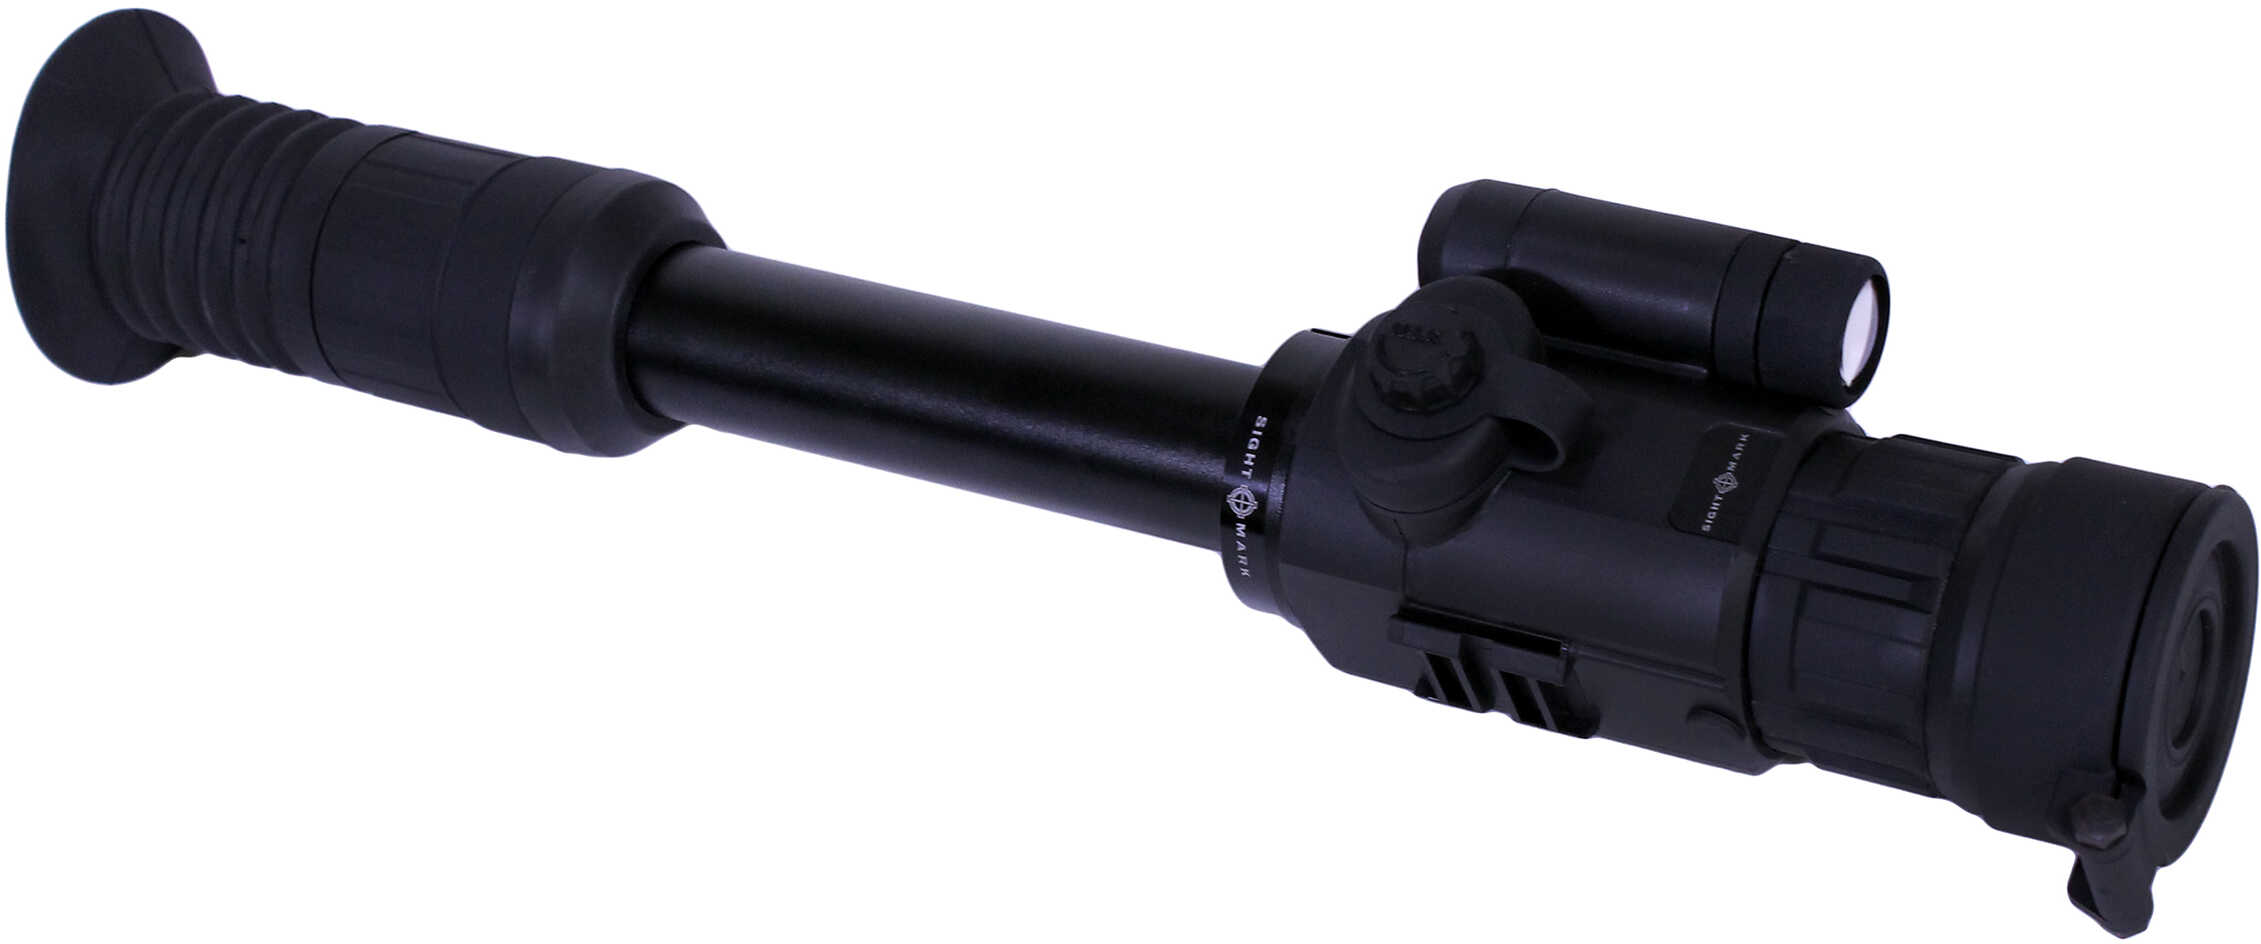 Photon Digital Night Vision Riflescope XT 4.6x42S Md: SM18008